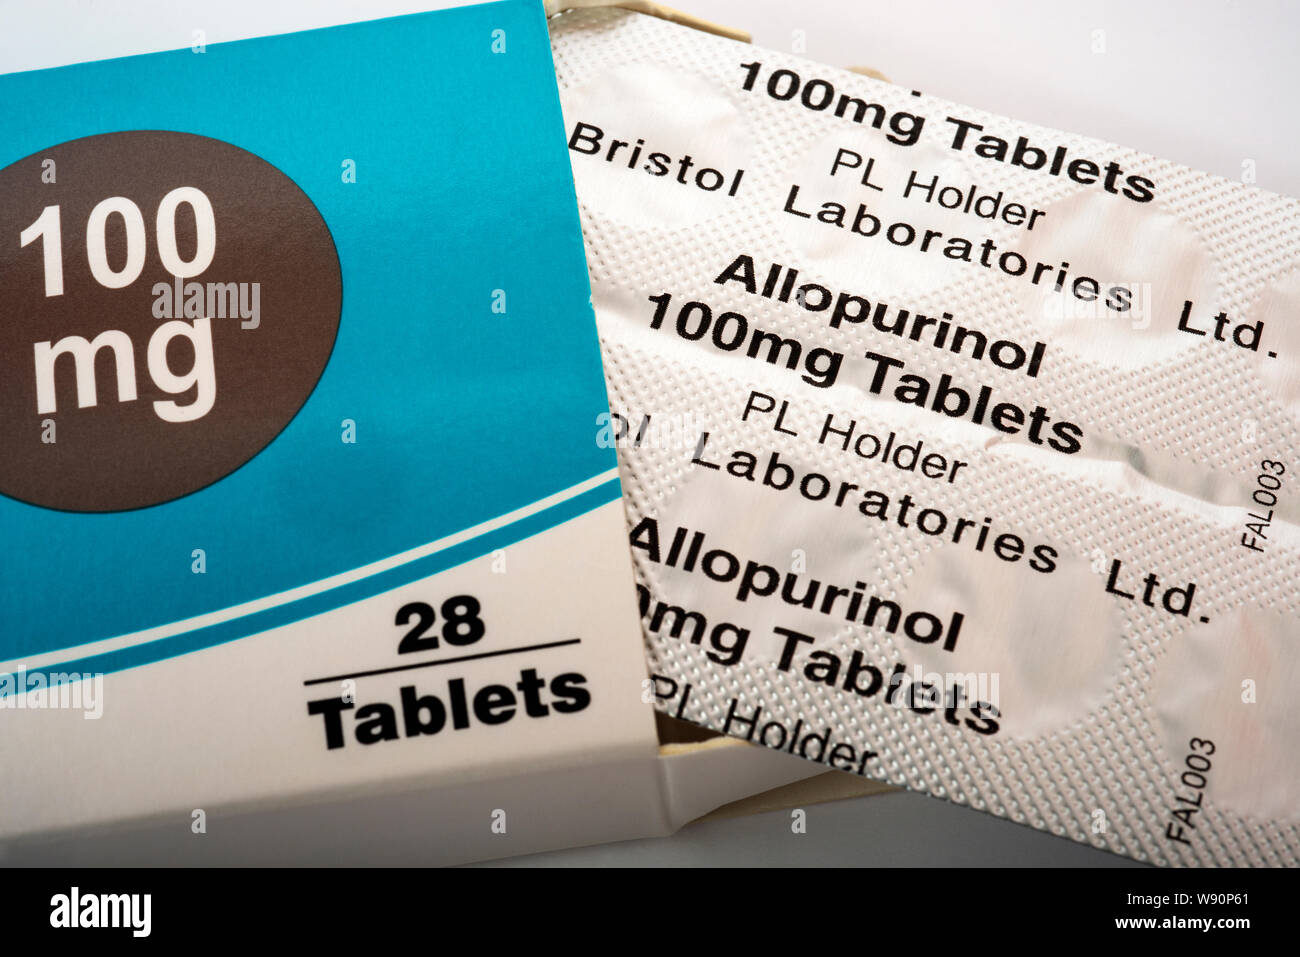 Bristol Laboratories Allopurinol tablets Stock Photo